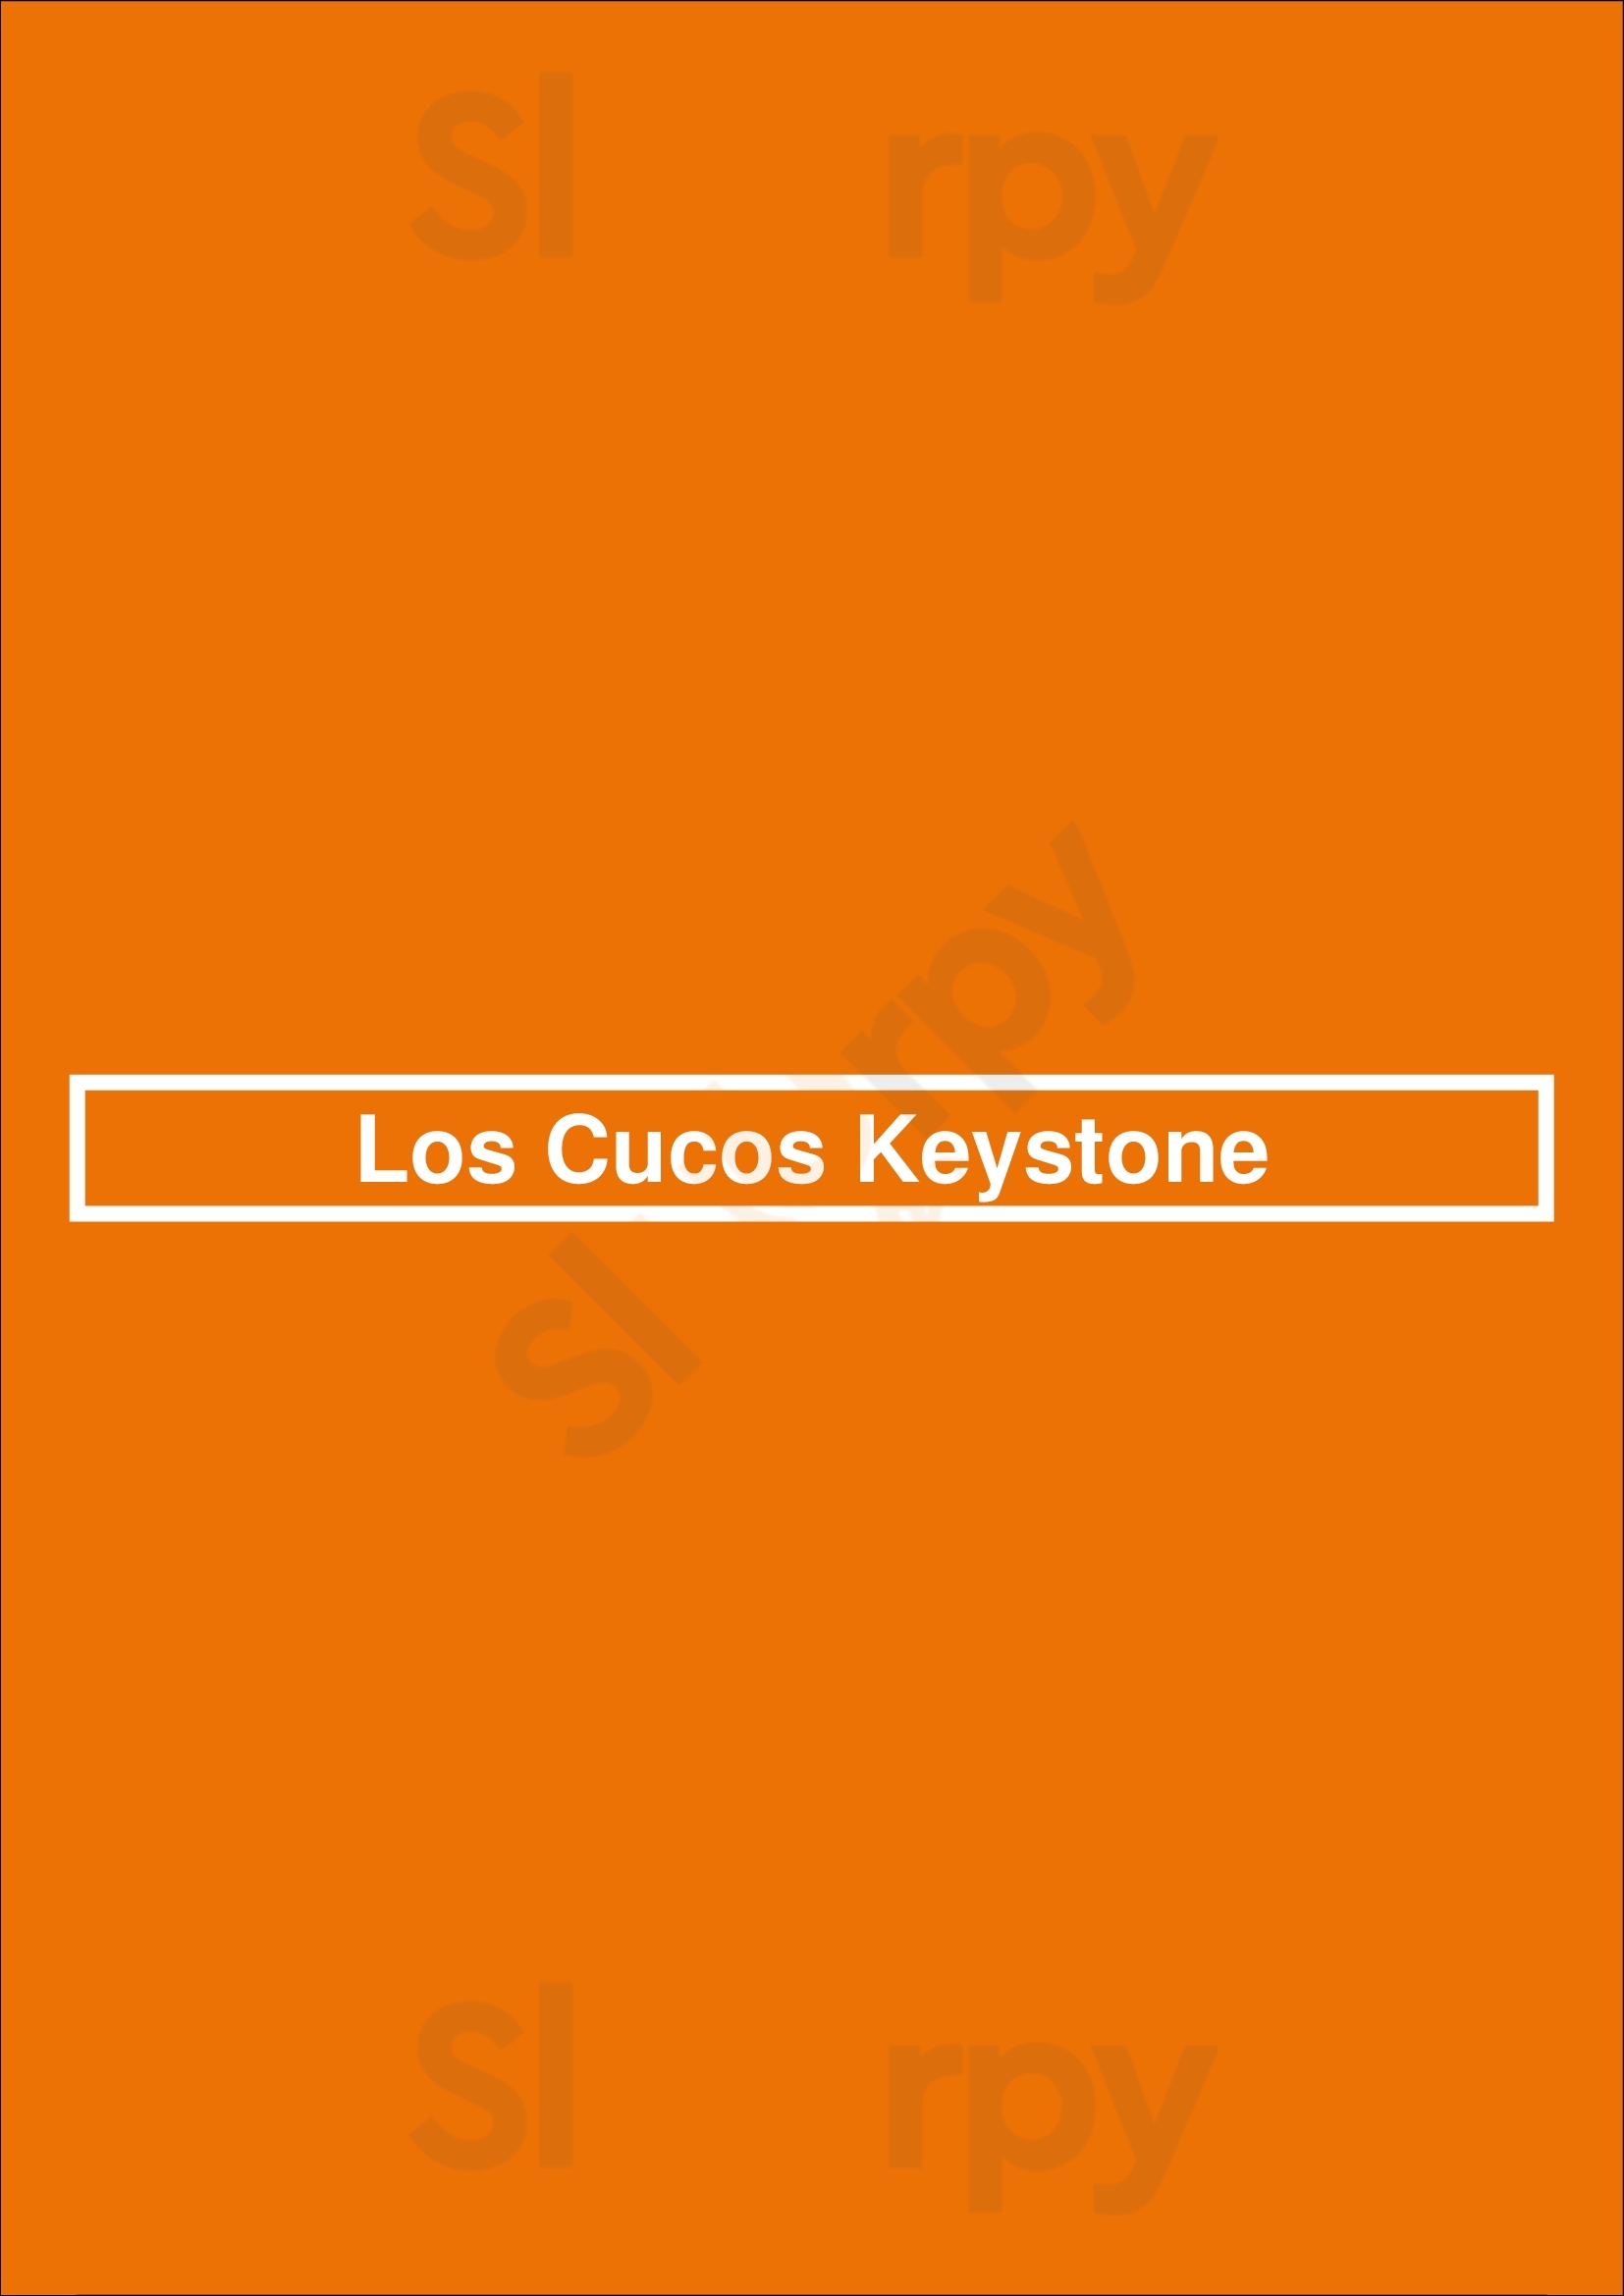 Los Cucos Keystone Houston Menu - 1